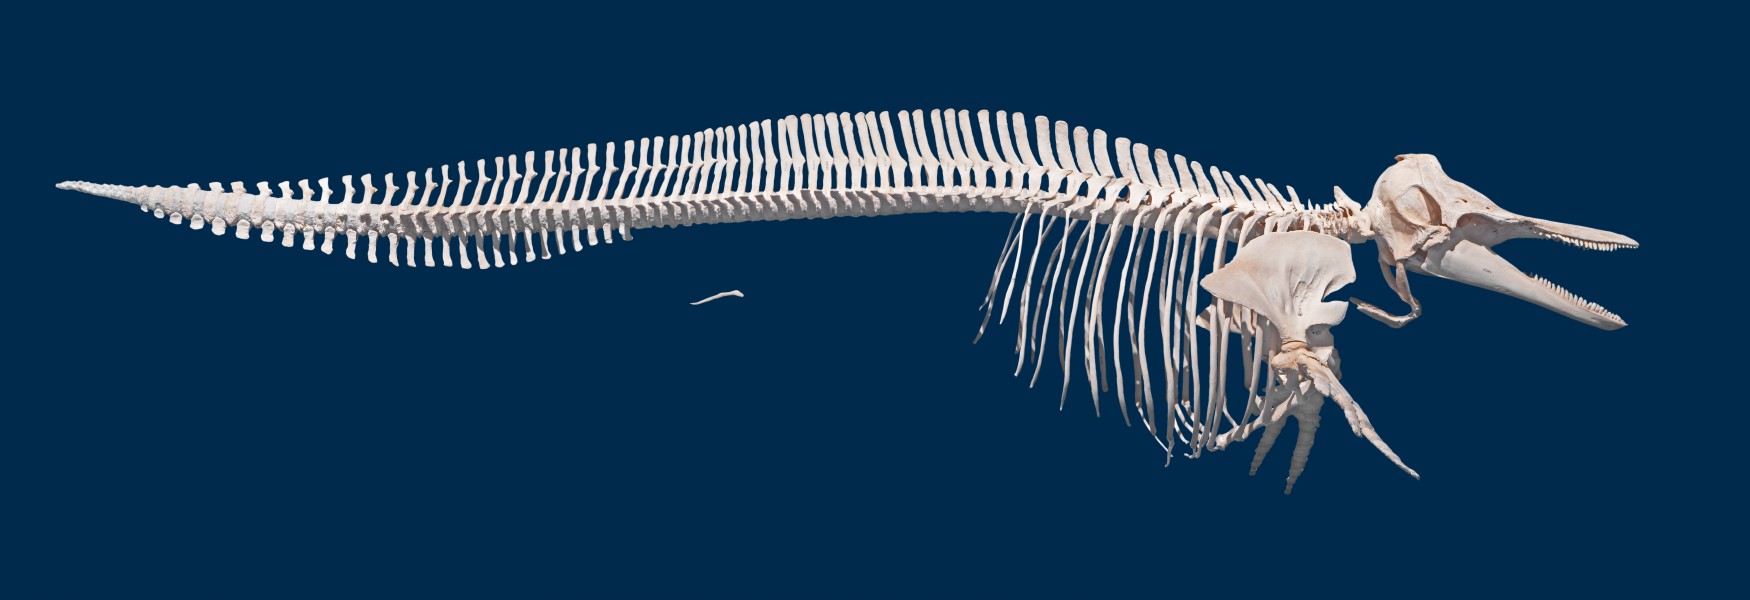 Lagenorhynchus albirostris - skeleton